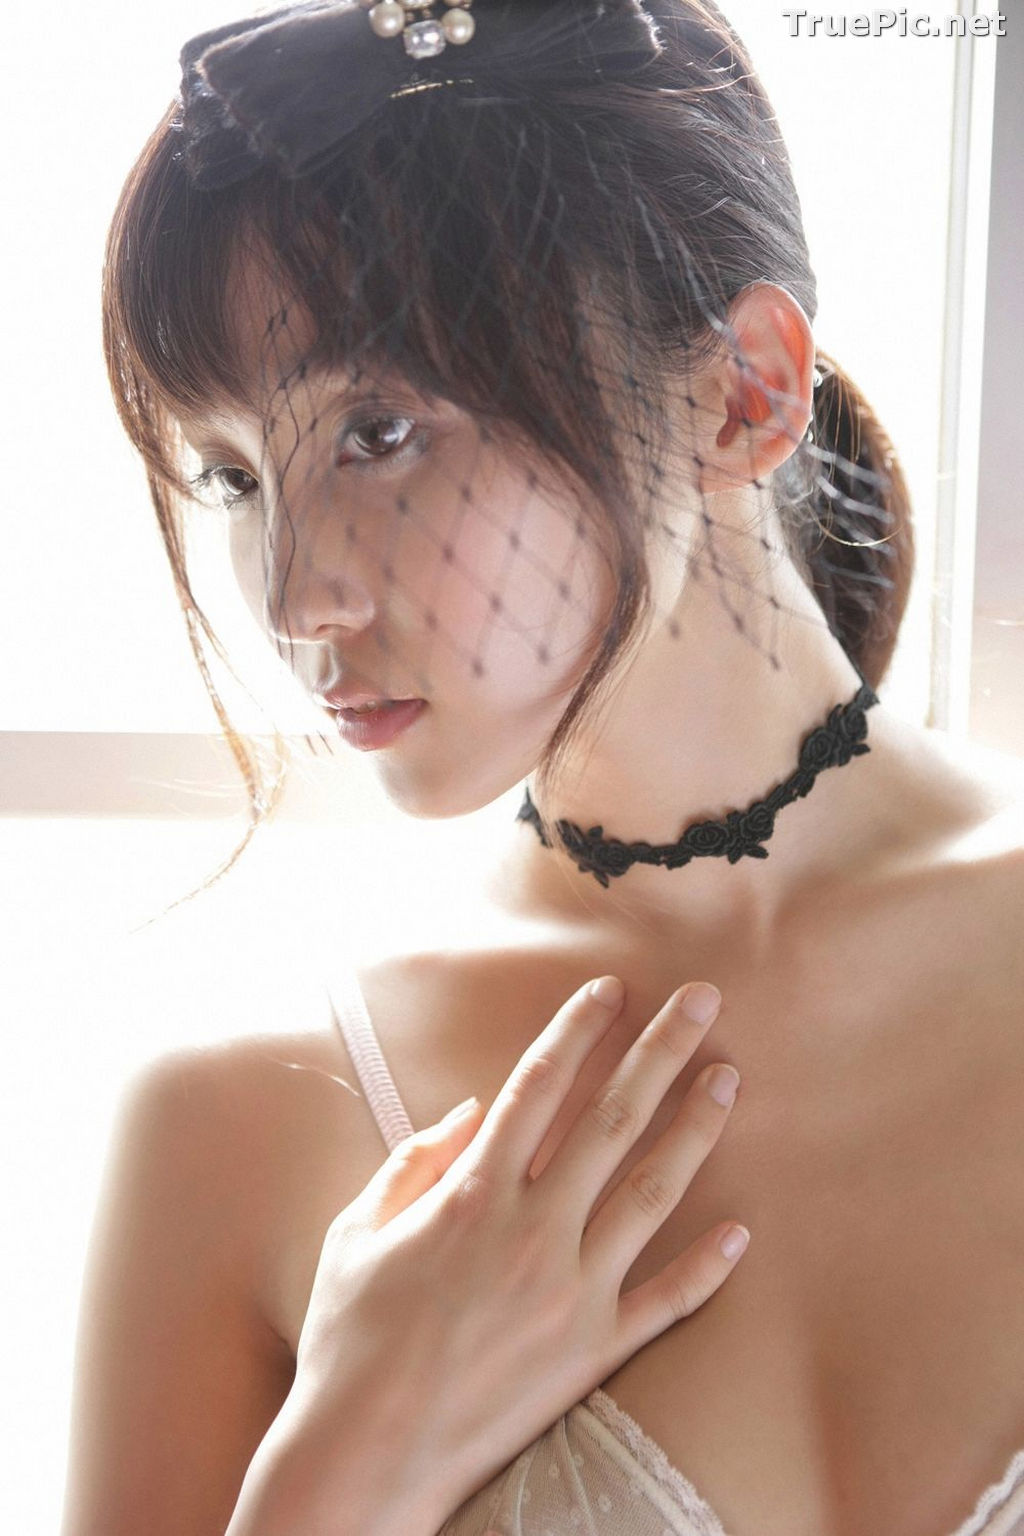 Image [YS Web] Vol.527 - Japanese Gravure Idol and Singer - Risa Yoshiki - TruePic.net - Picture-45